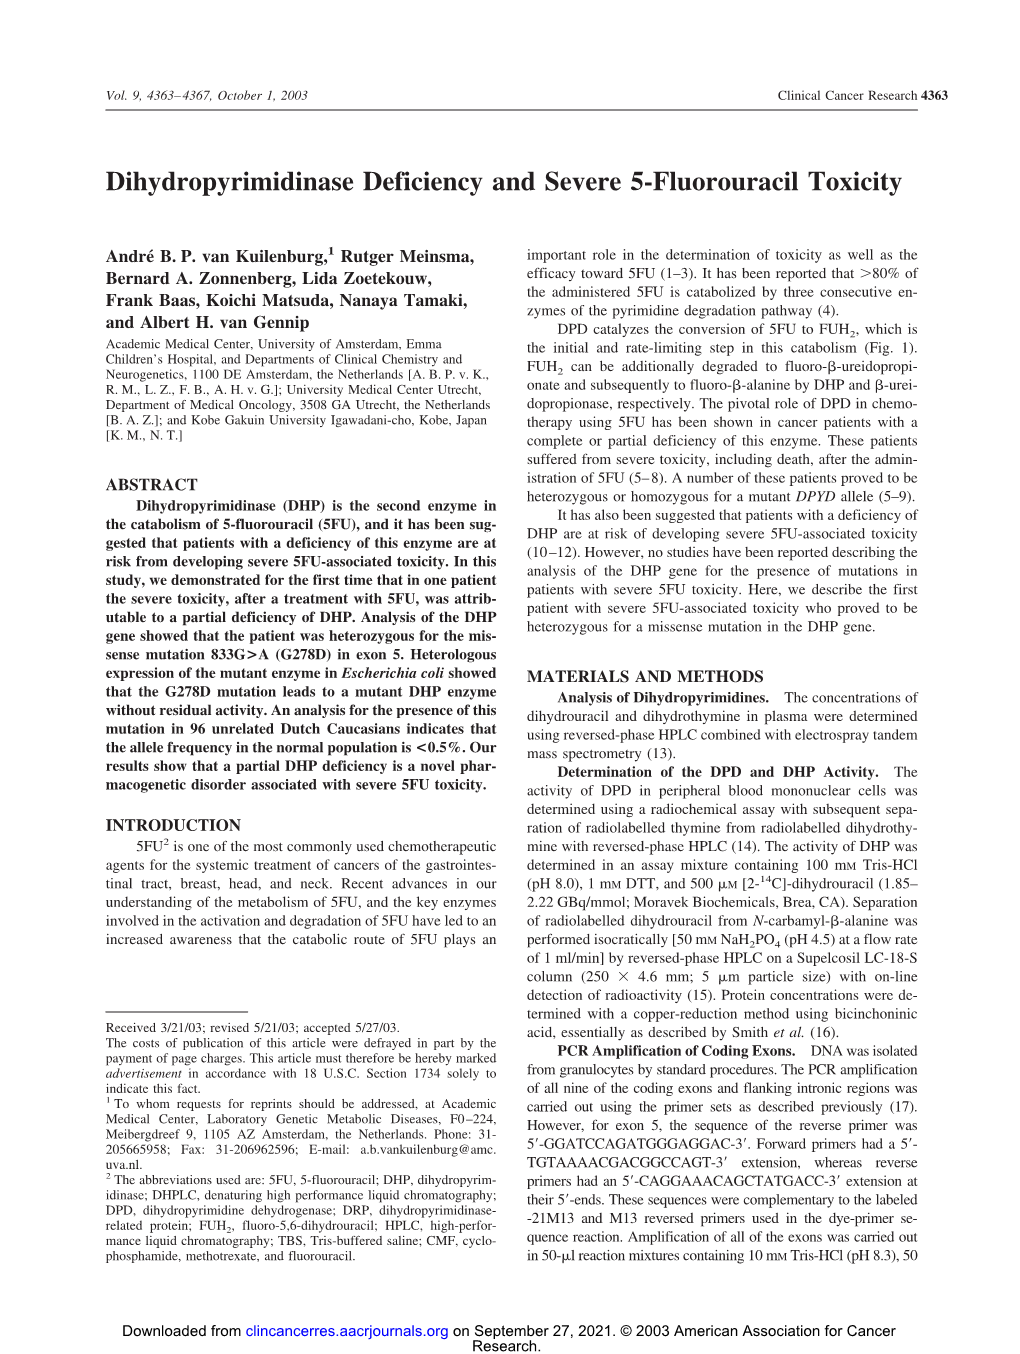 Dihydropyrimidinase Deficiency and Severe 5-Fluorouracil Toxicity